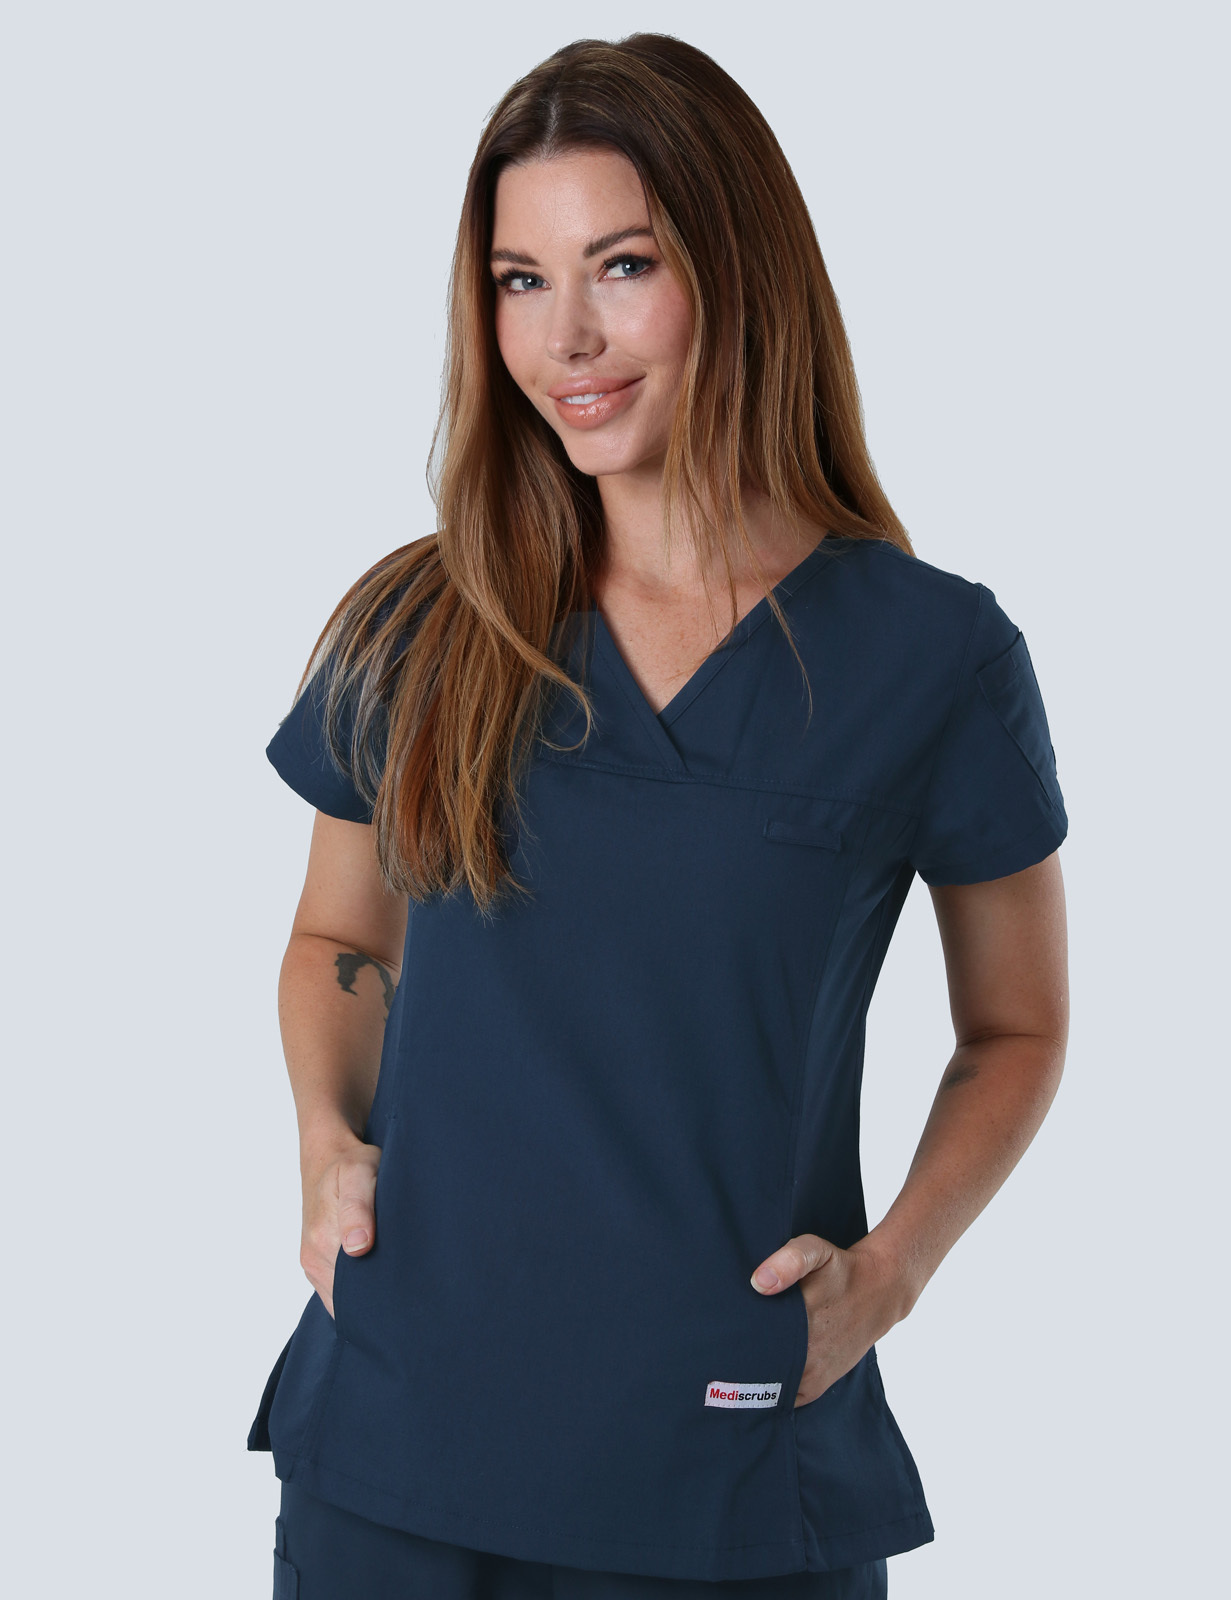 UQ Vets Gatton Senior Nurse Uniform Top Only Bundle (Women's Fit Solid Top in Navy incl Logos)